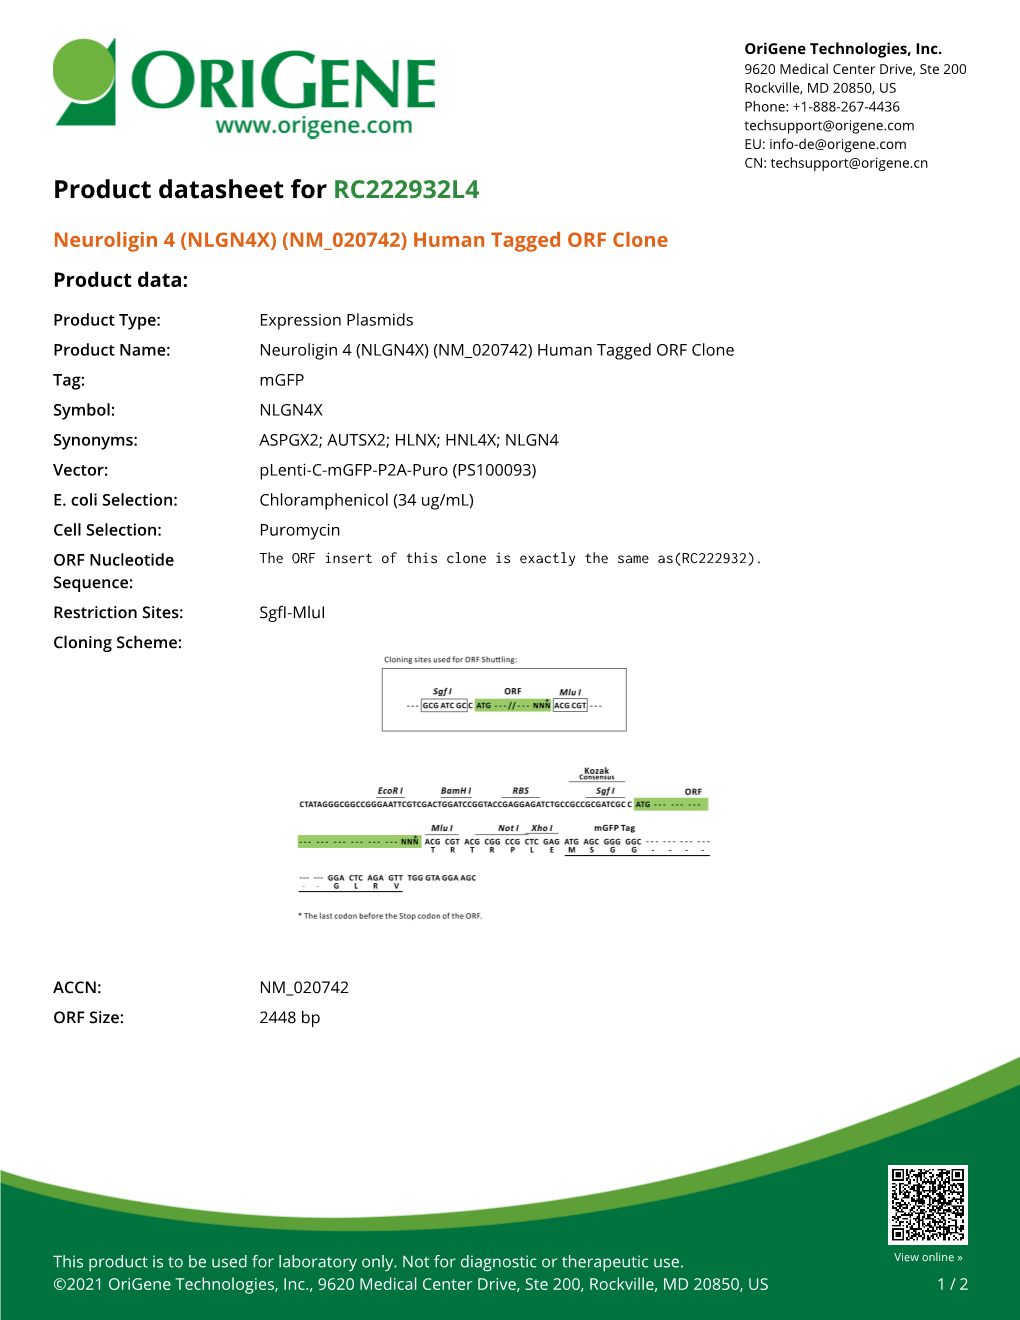 Neuroligin 4 (NLGN4X) (NM 020742) Human Tagged ORF Clone Product Data